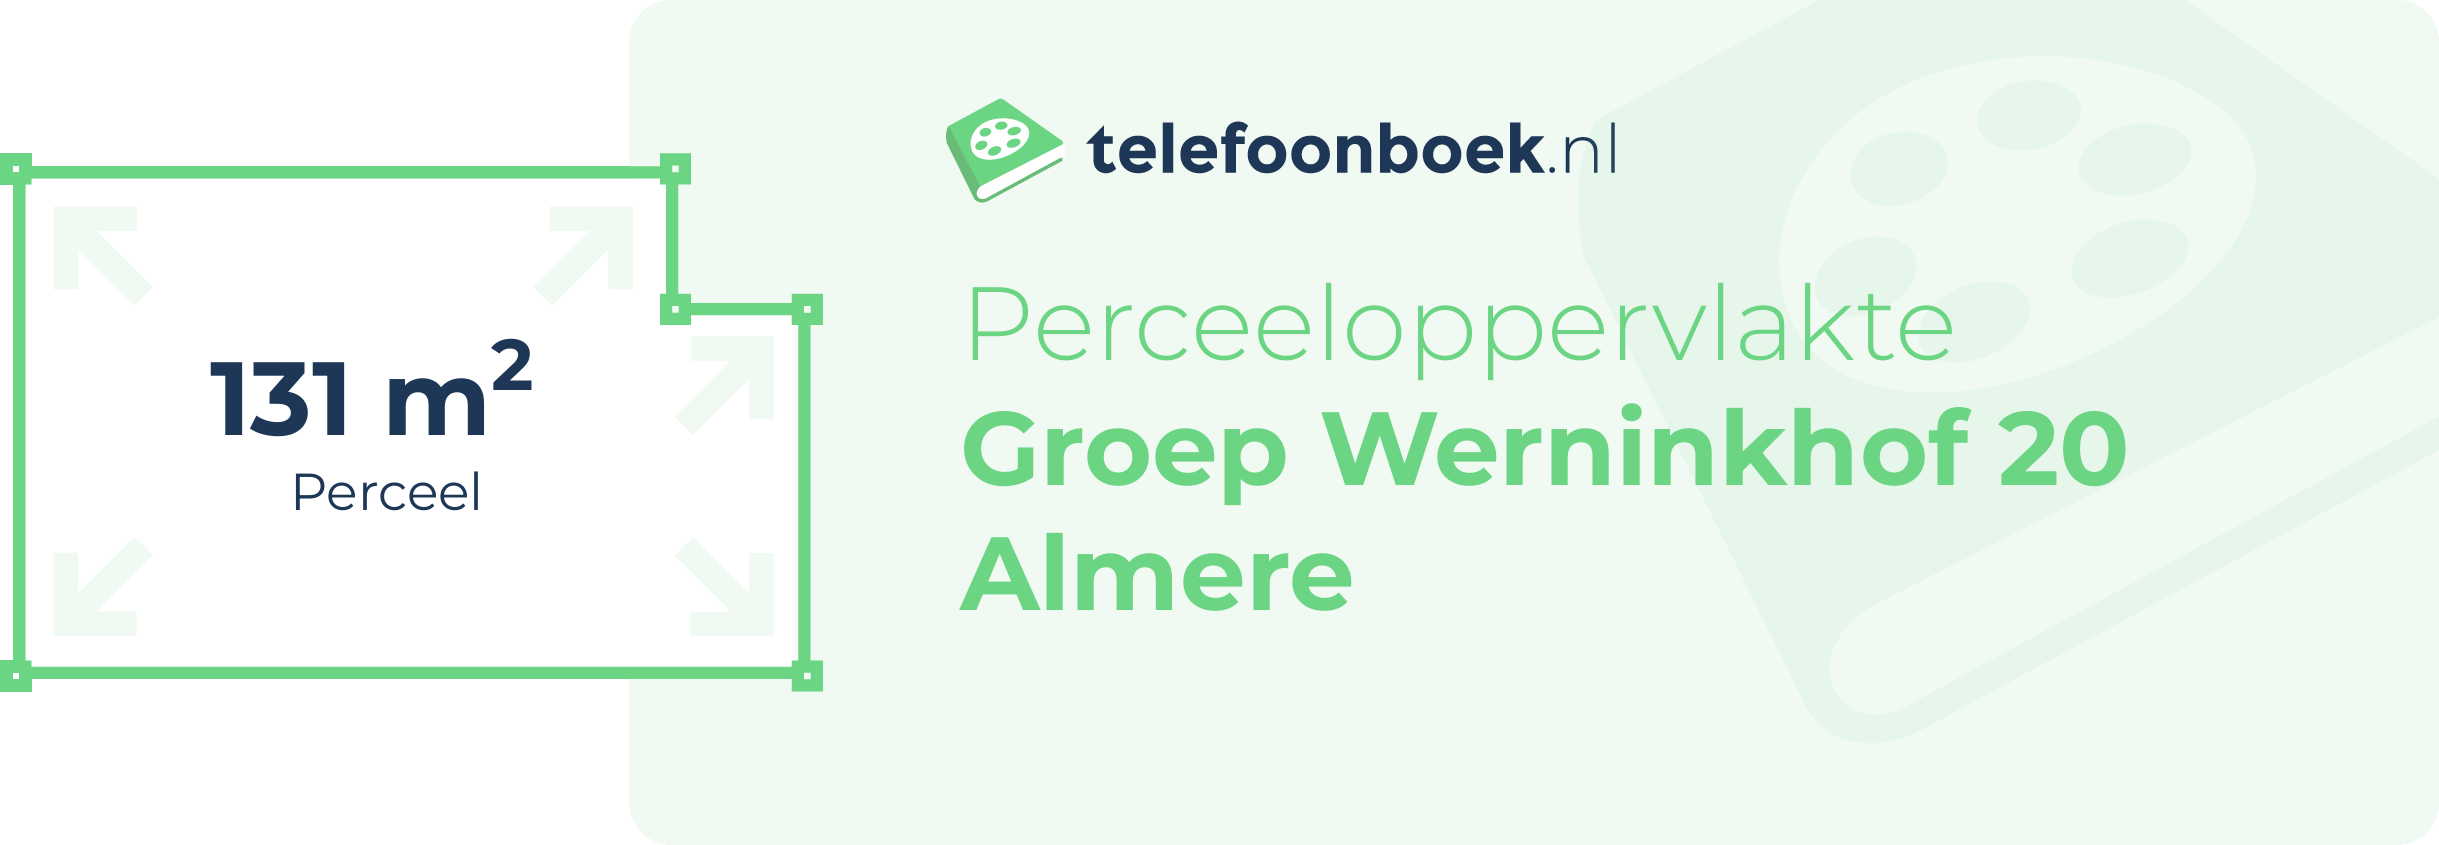 Perceeloppervlakte Groep Werninkhof 20 Almere